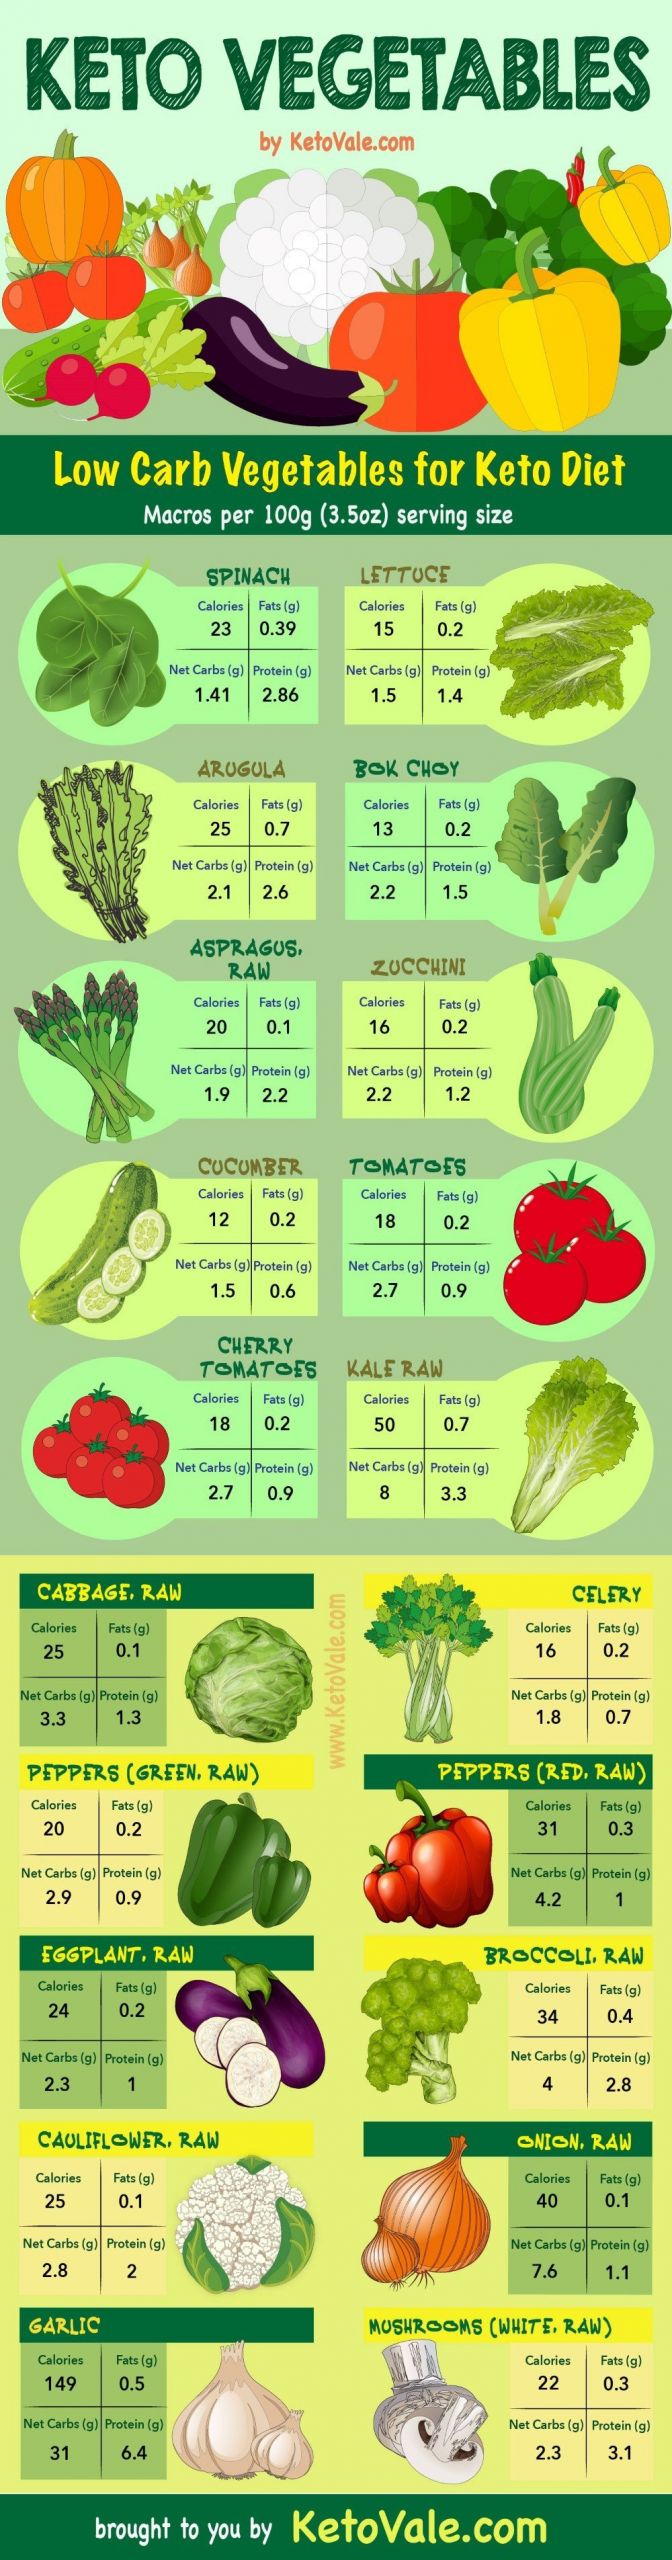 Keto Diet Veggies
 Keto Diet Food List Low Carb Grocery Shopping Guide PDF